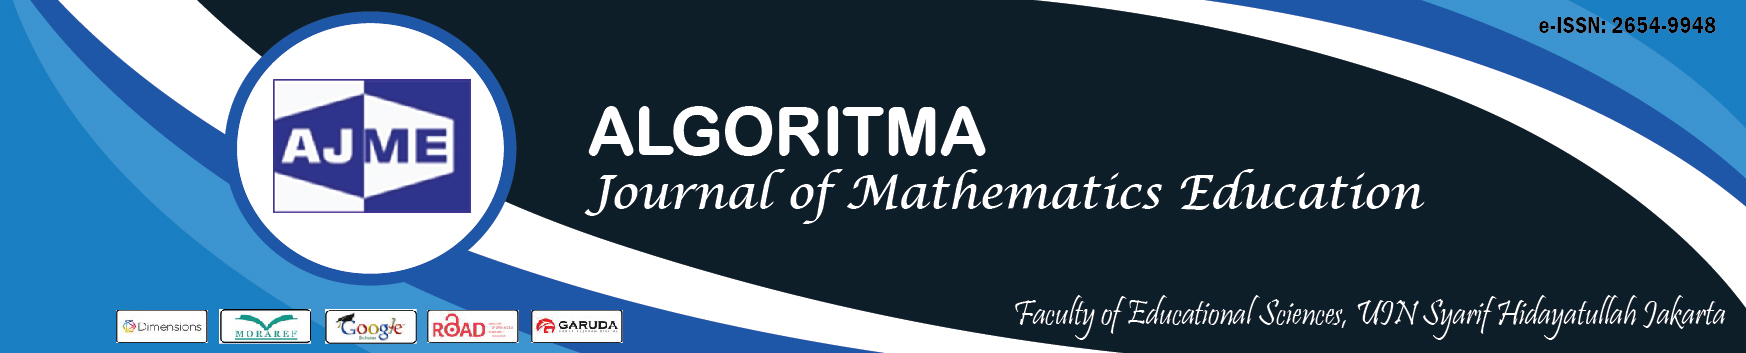 ALGORITMA JOURNAL OF MATHEMATICS EDUCATION